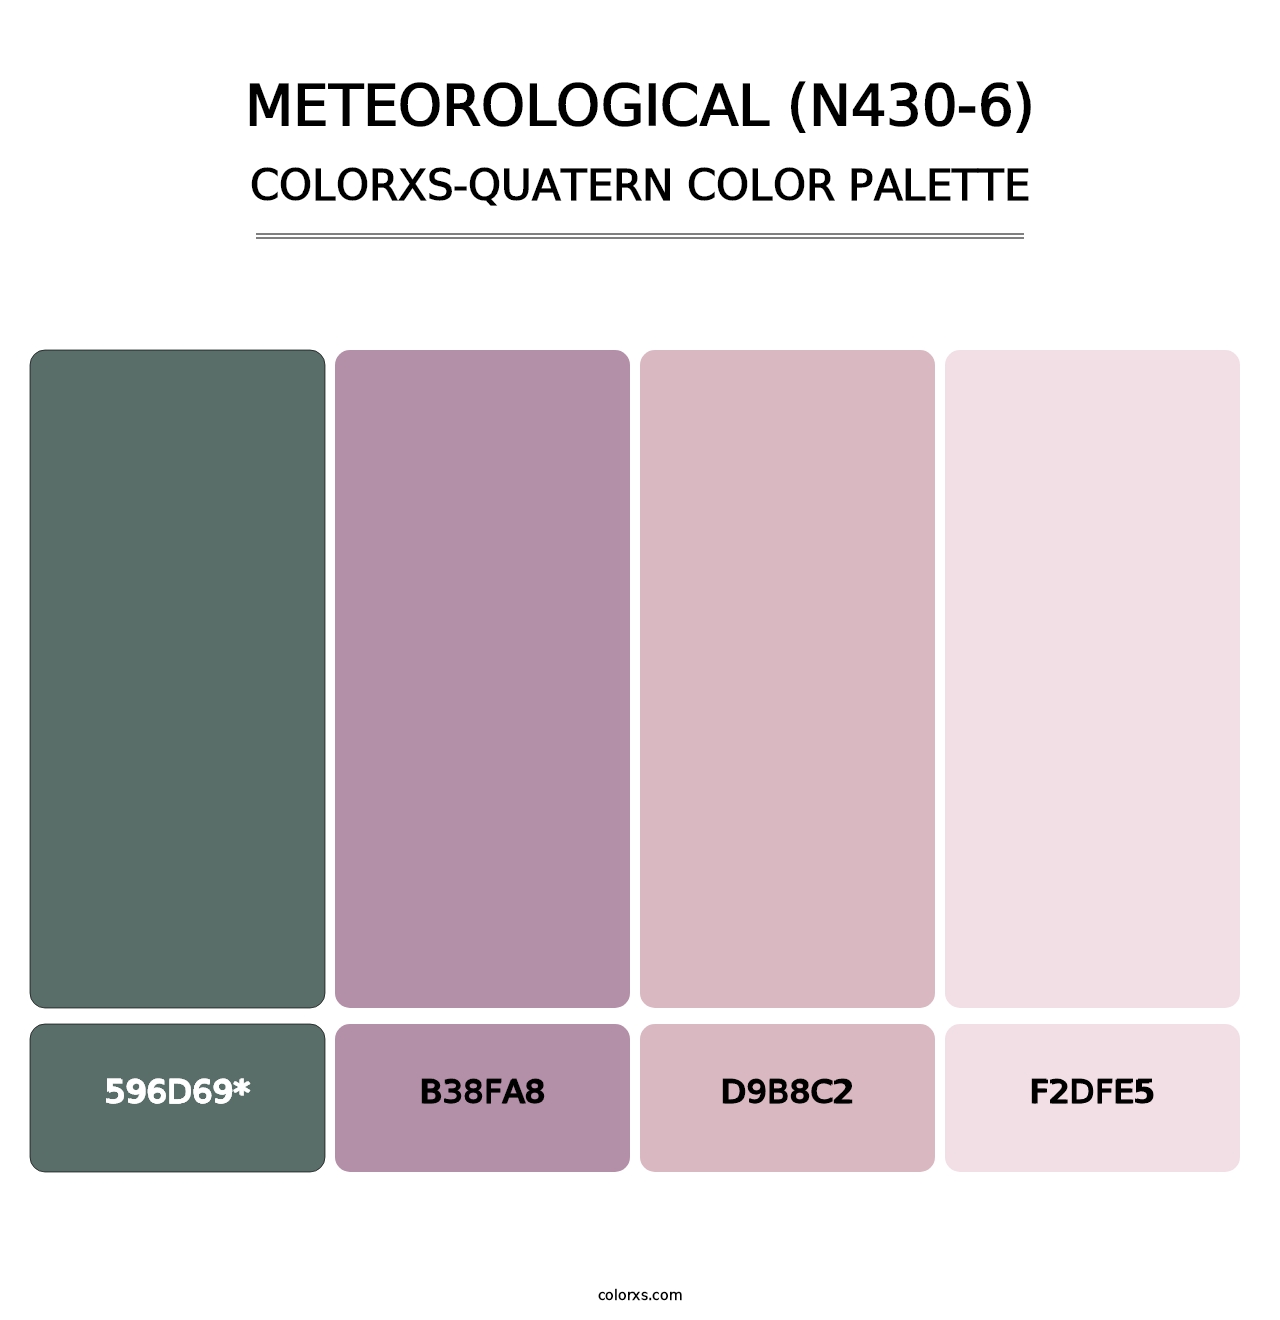 Meteorological (N430-6) - Colorxs Quatern Palette